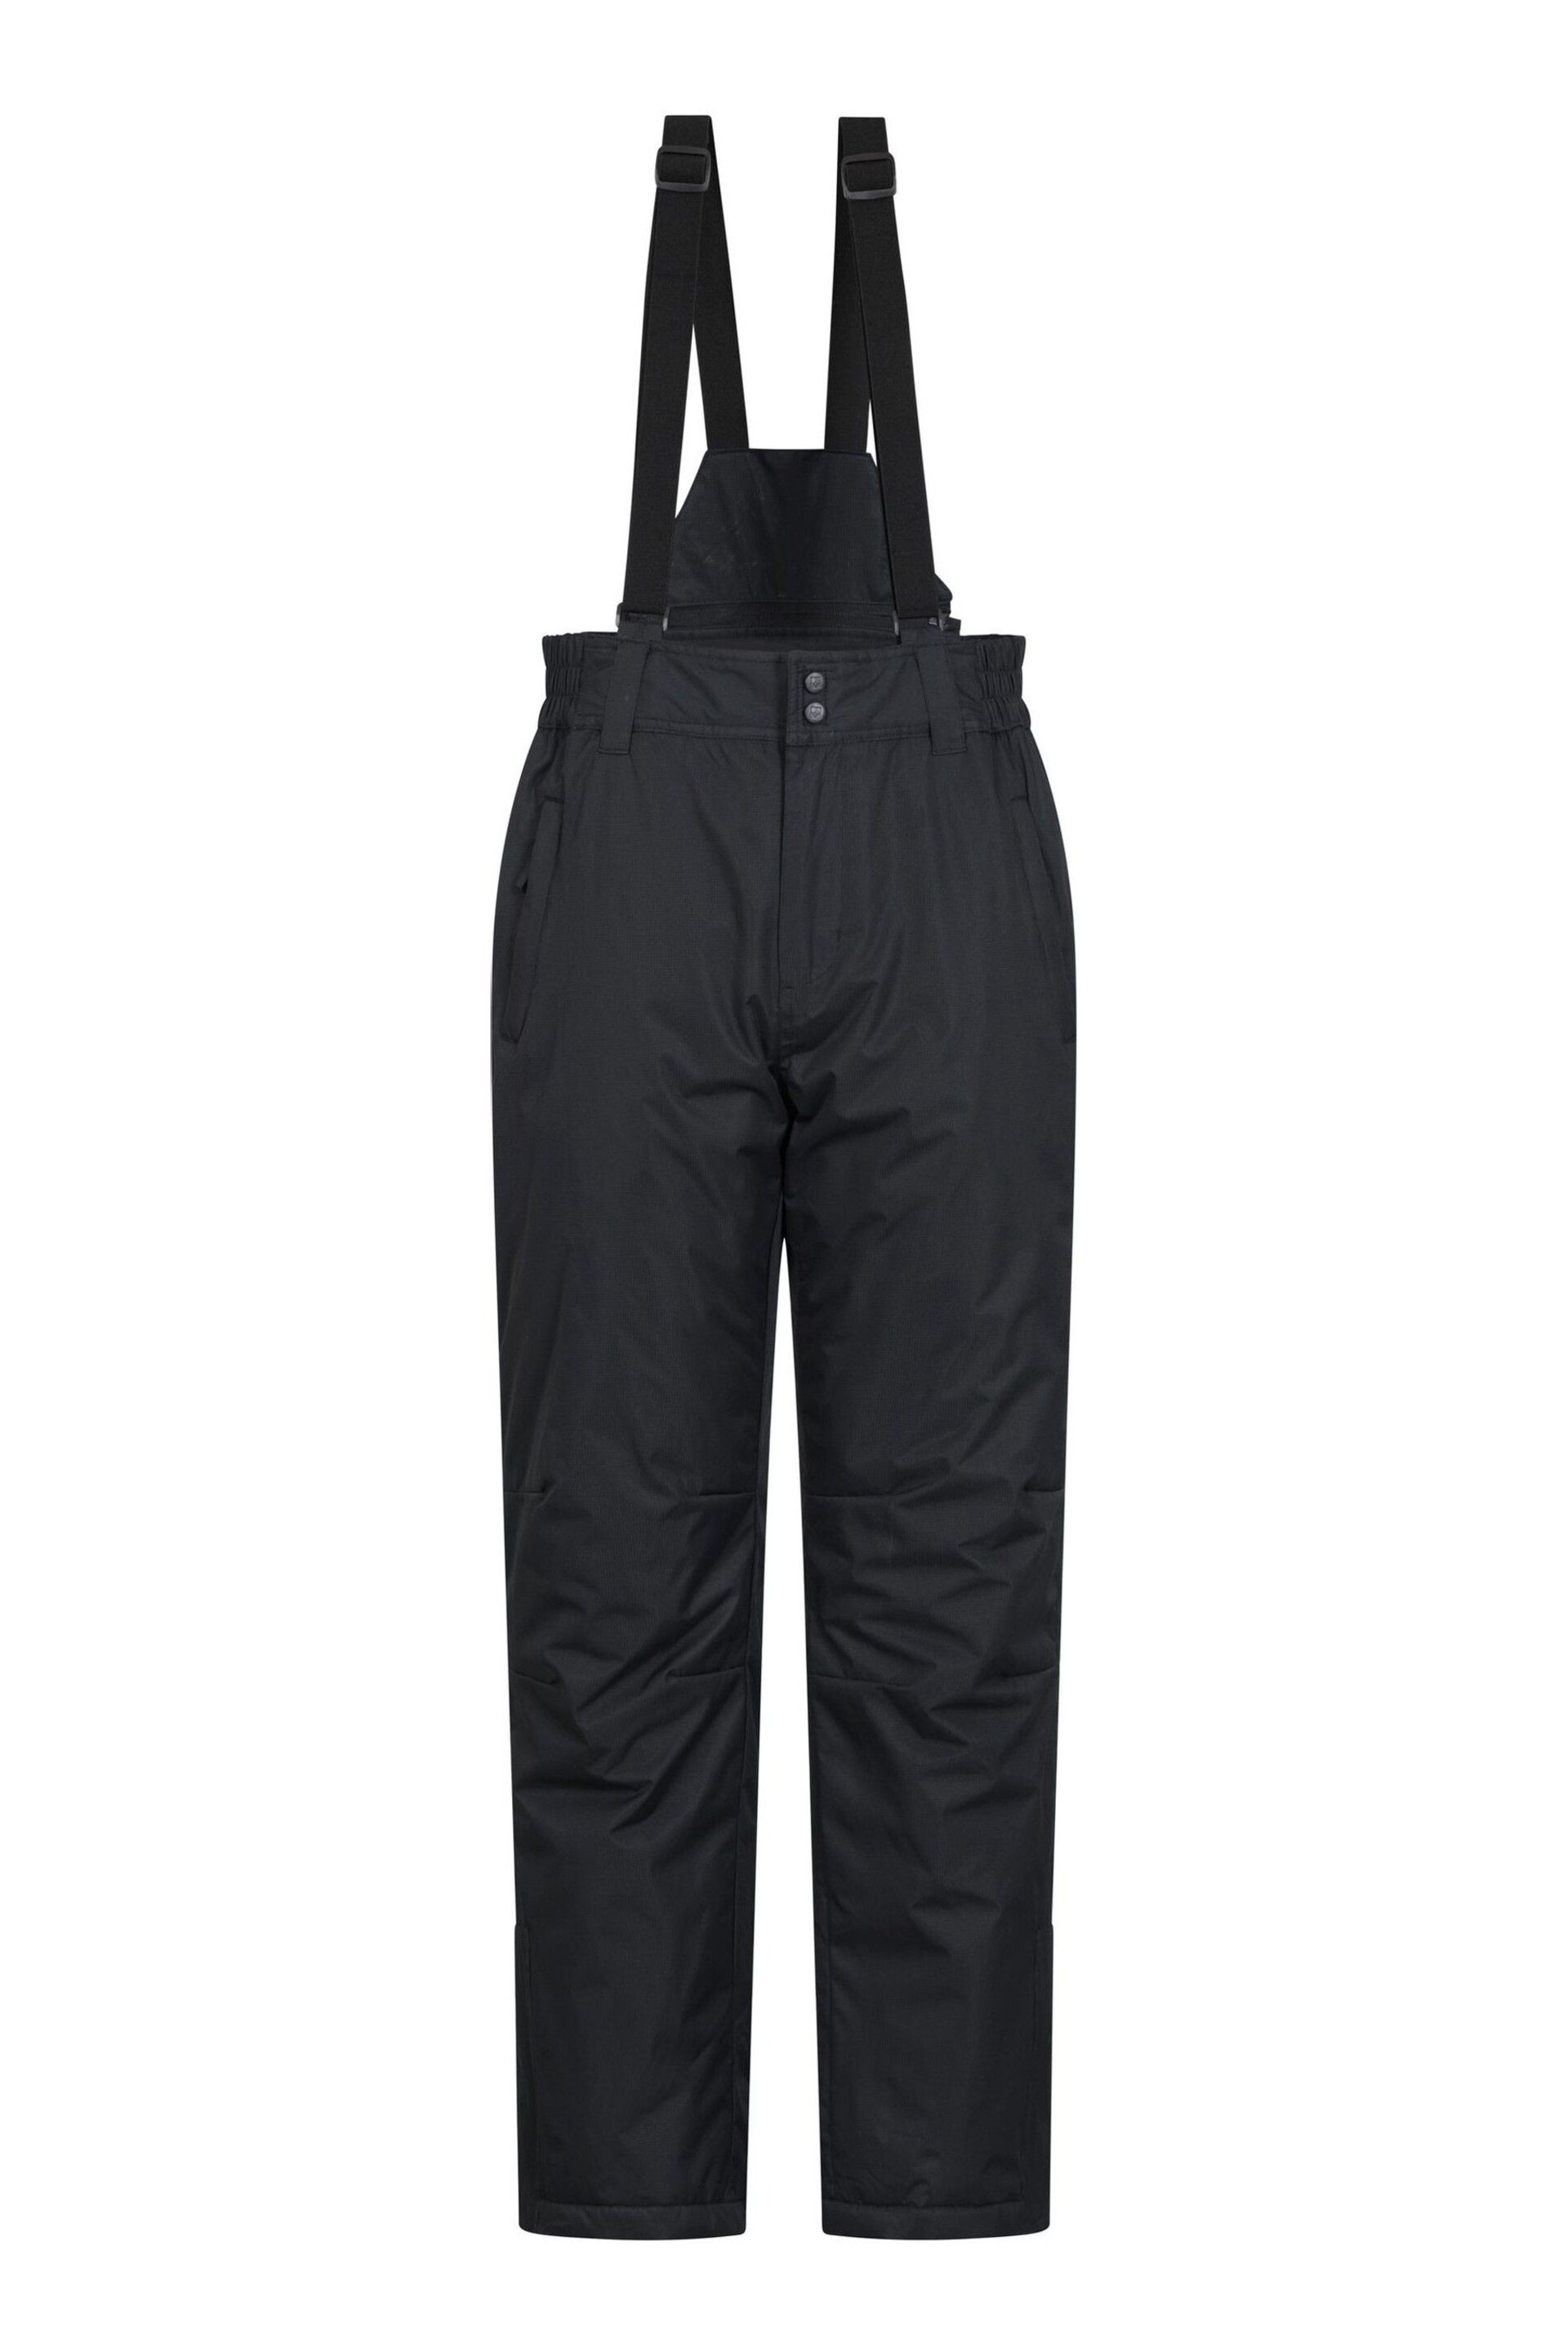 Mountain Warehouse Black Dusk Ski Trousers - Mens - Image 1 of 5